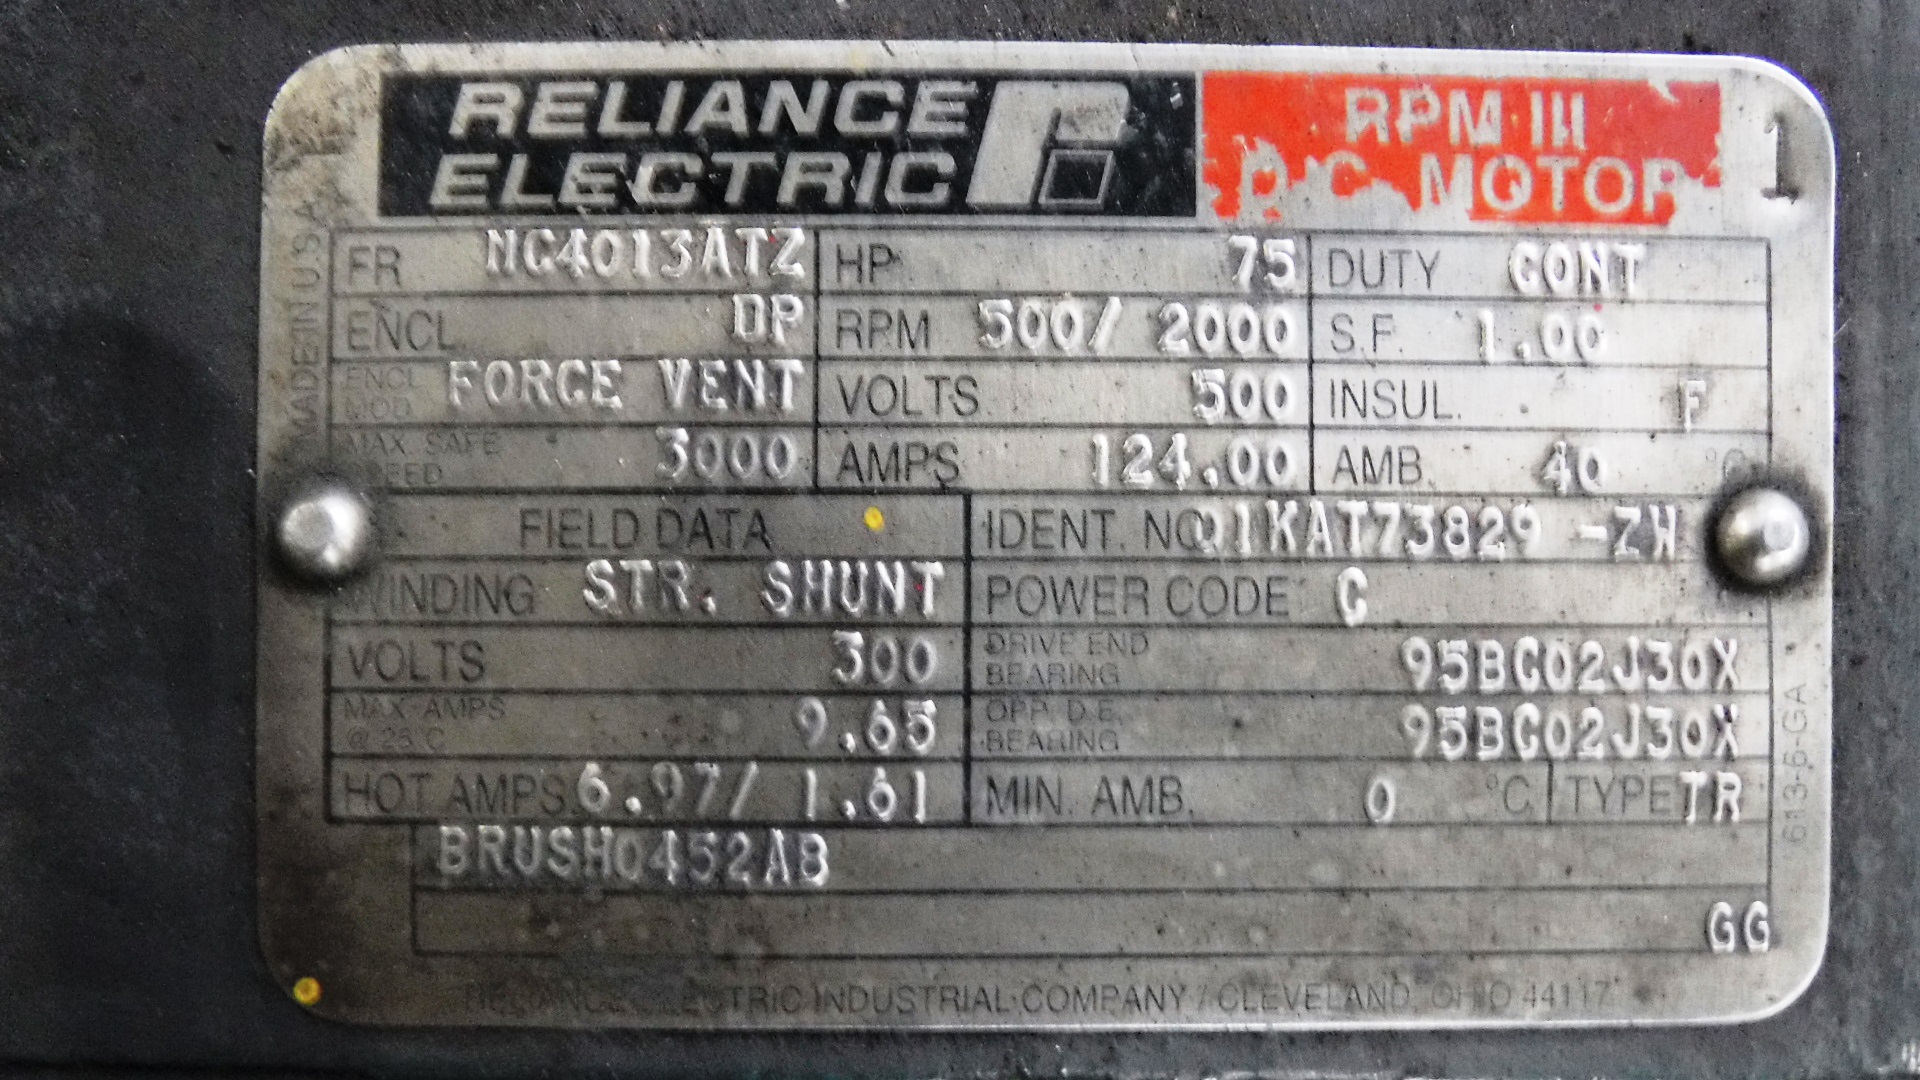 Reliance 75 HP 500/2000 RPM MC4013ATZ DC Motors 82118